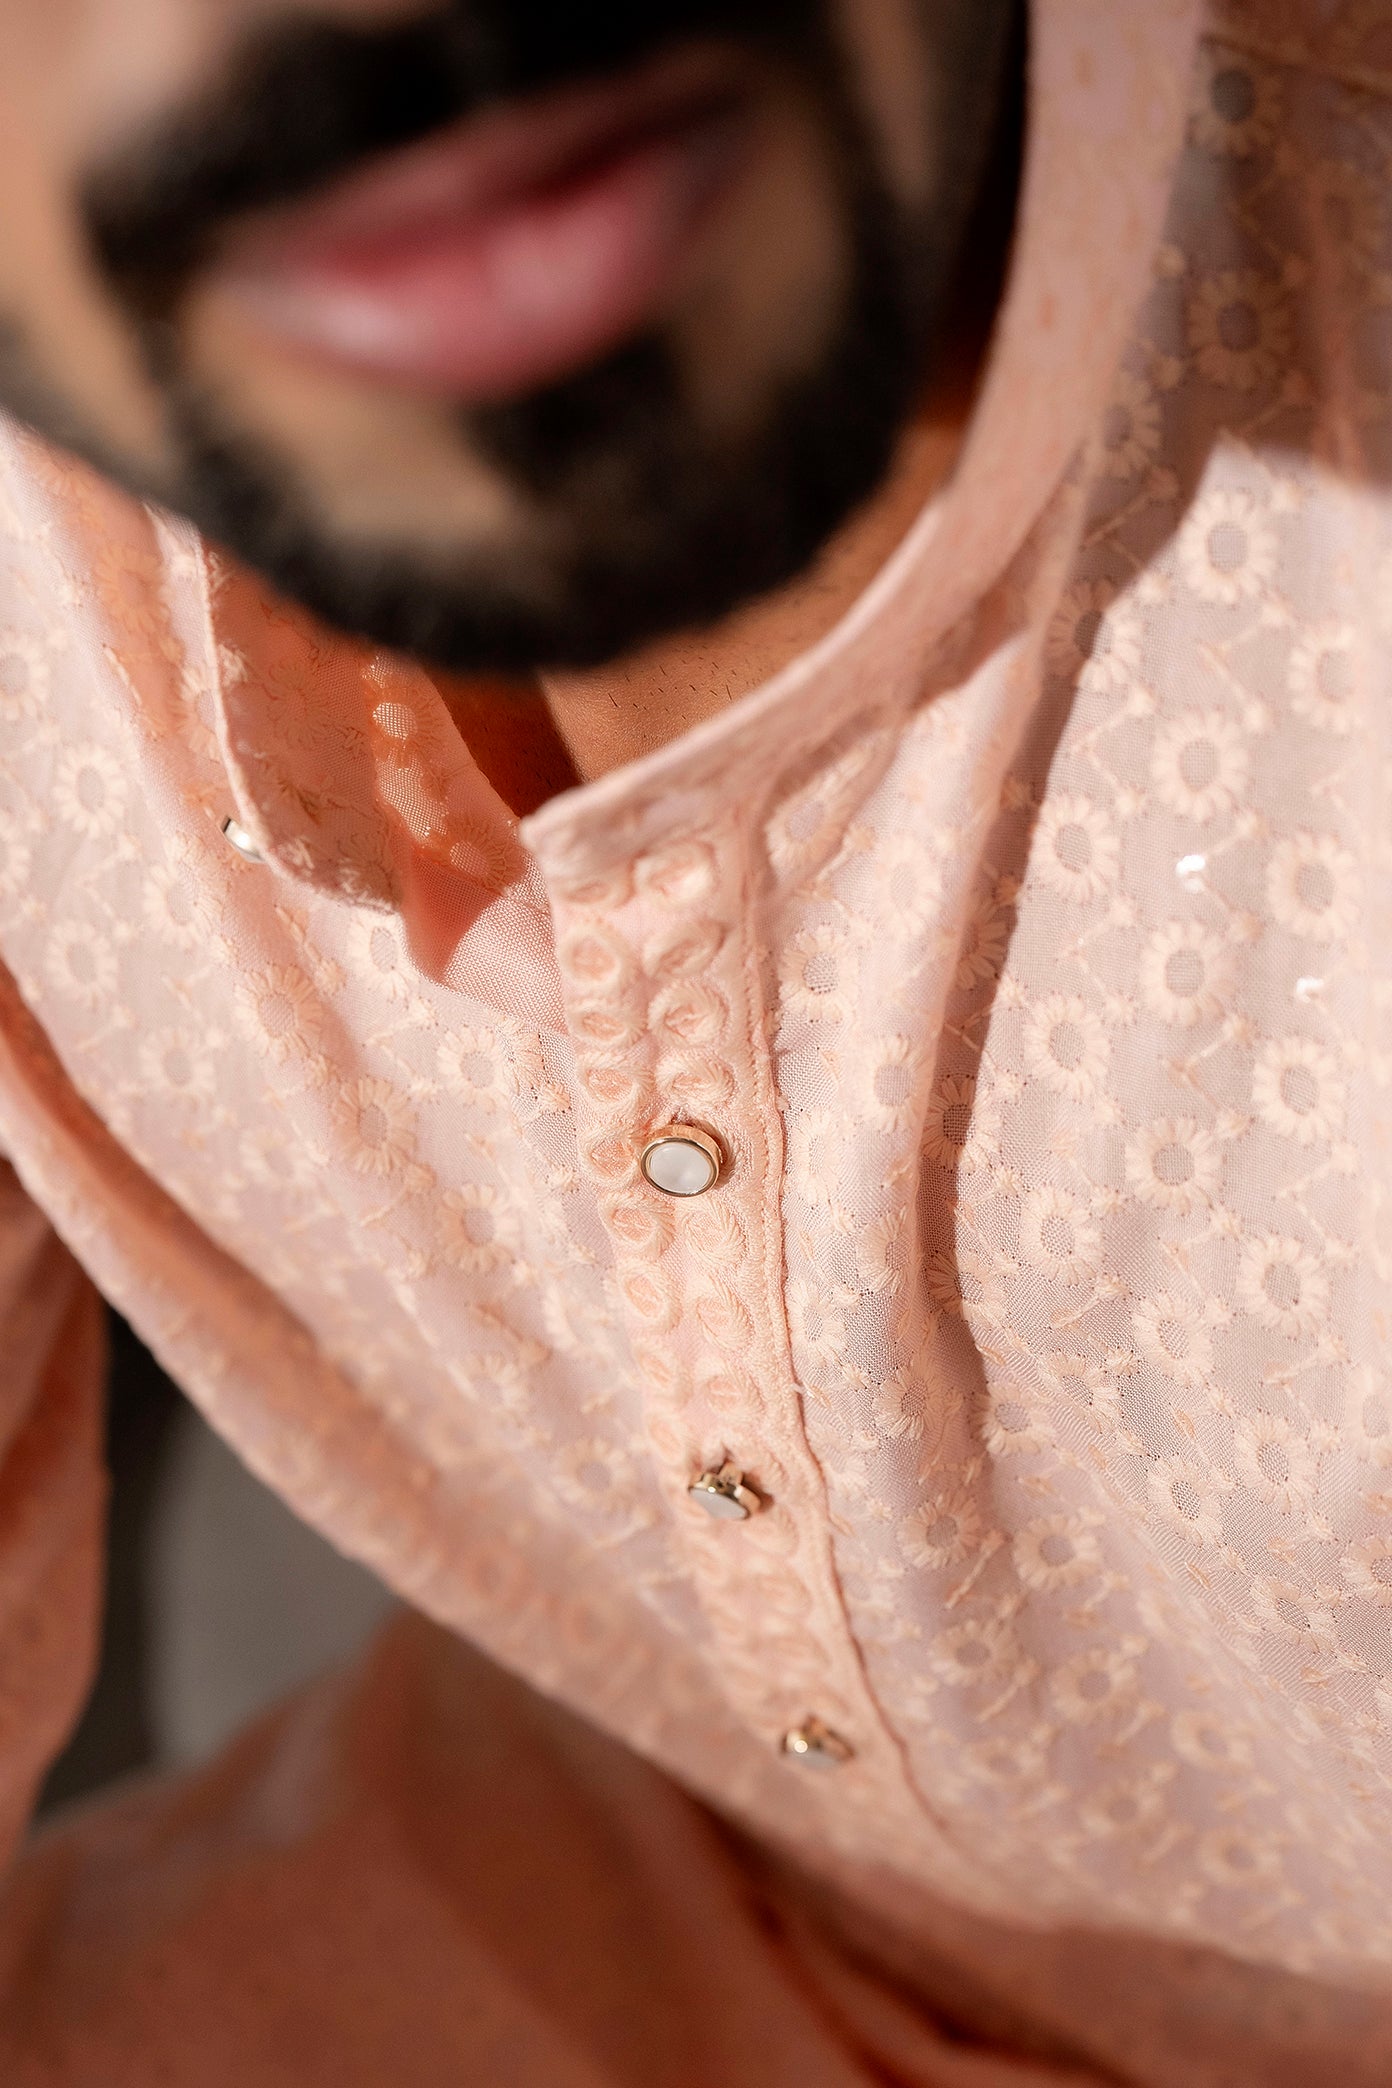 Firangi Yarn Lucknowi Lakhnavi Chikankari Sequin Work Cotton Kurta For Men Peach